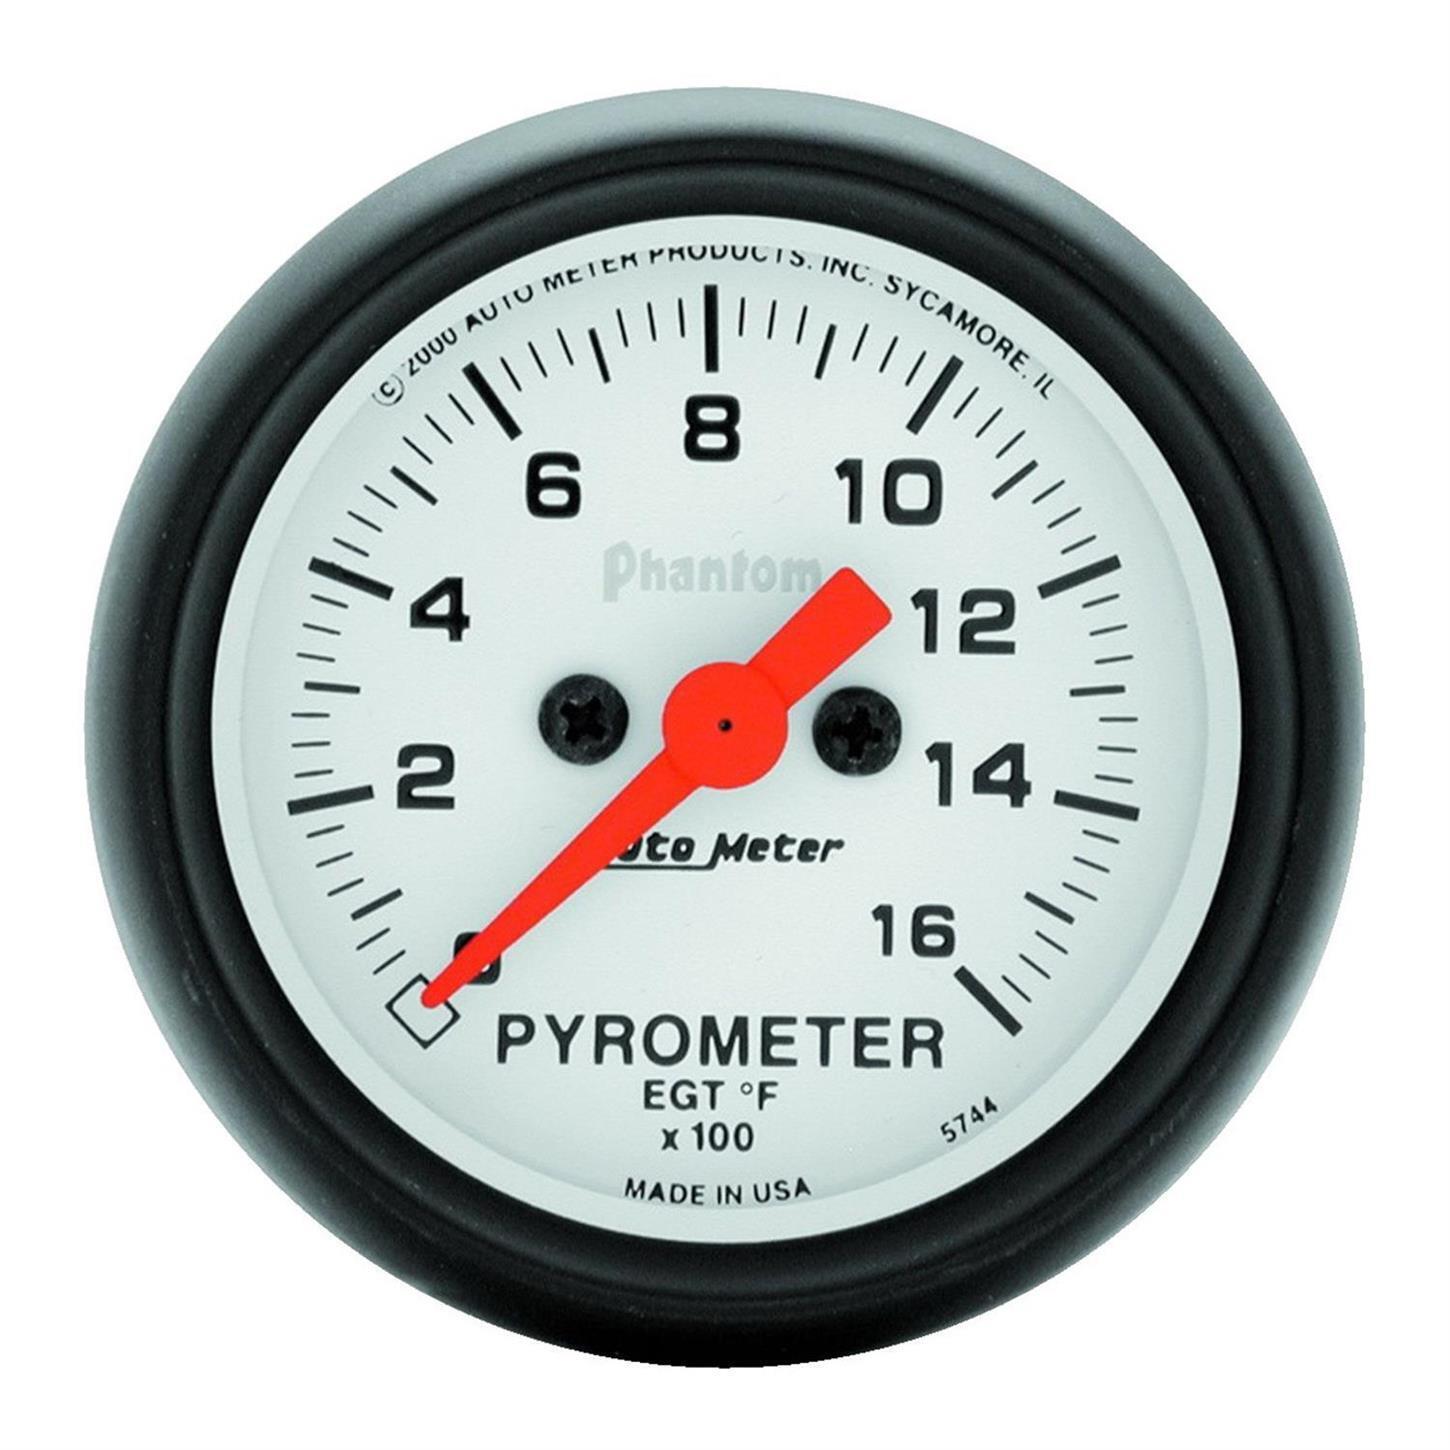 AutoMeter 5744 Phantom Digital Stepper Motor Pyrometer Gauge